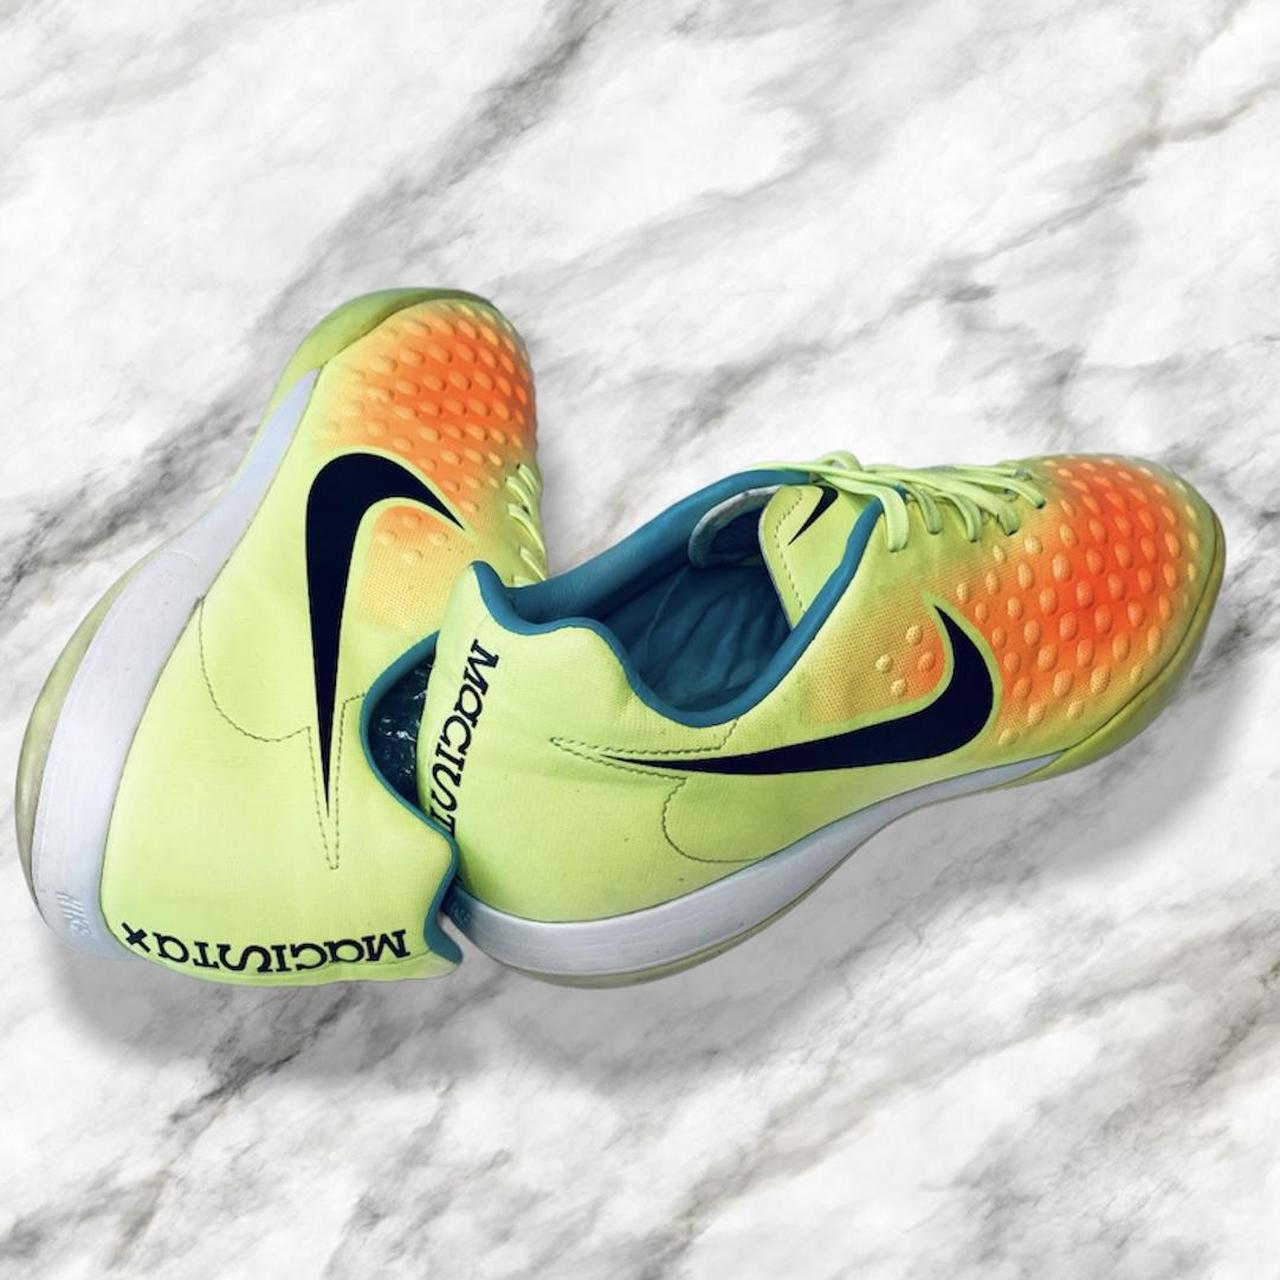 Product Image 2 - Nike MagistaX Onda II
Indoor(no cleats)